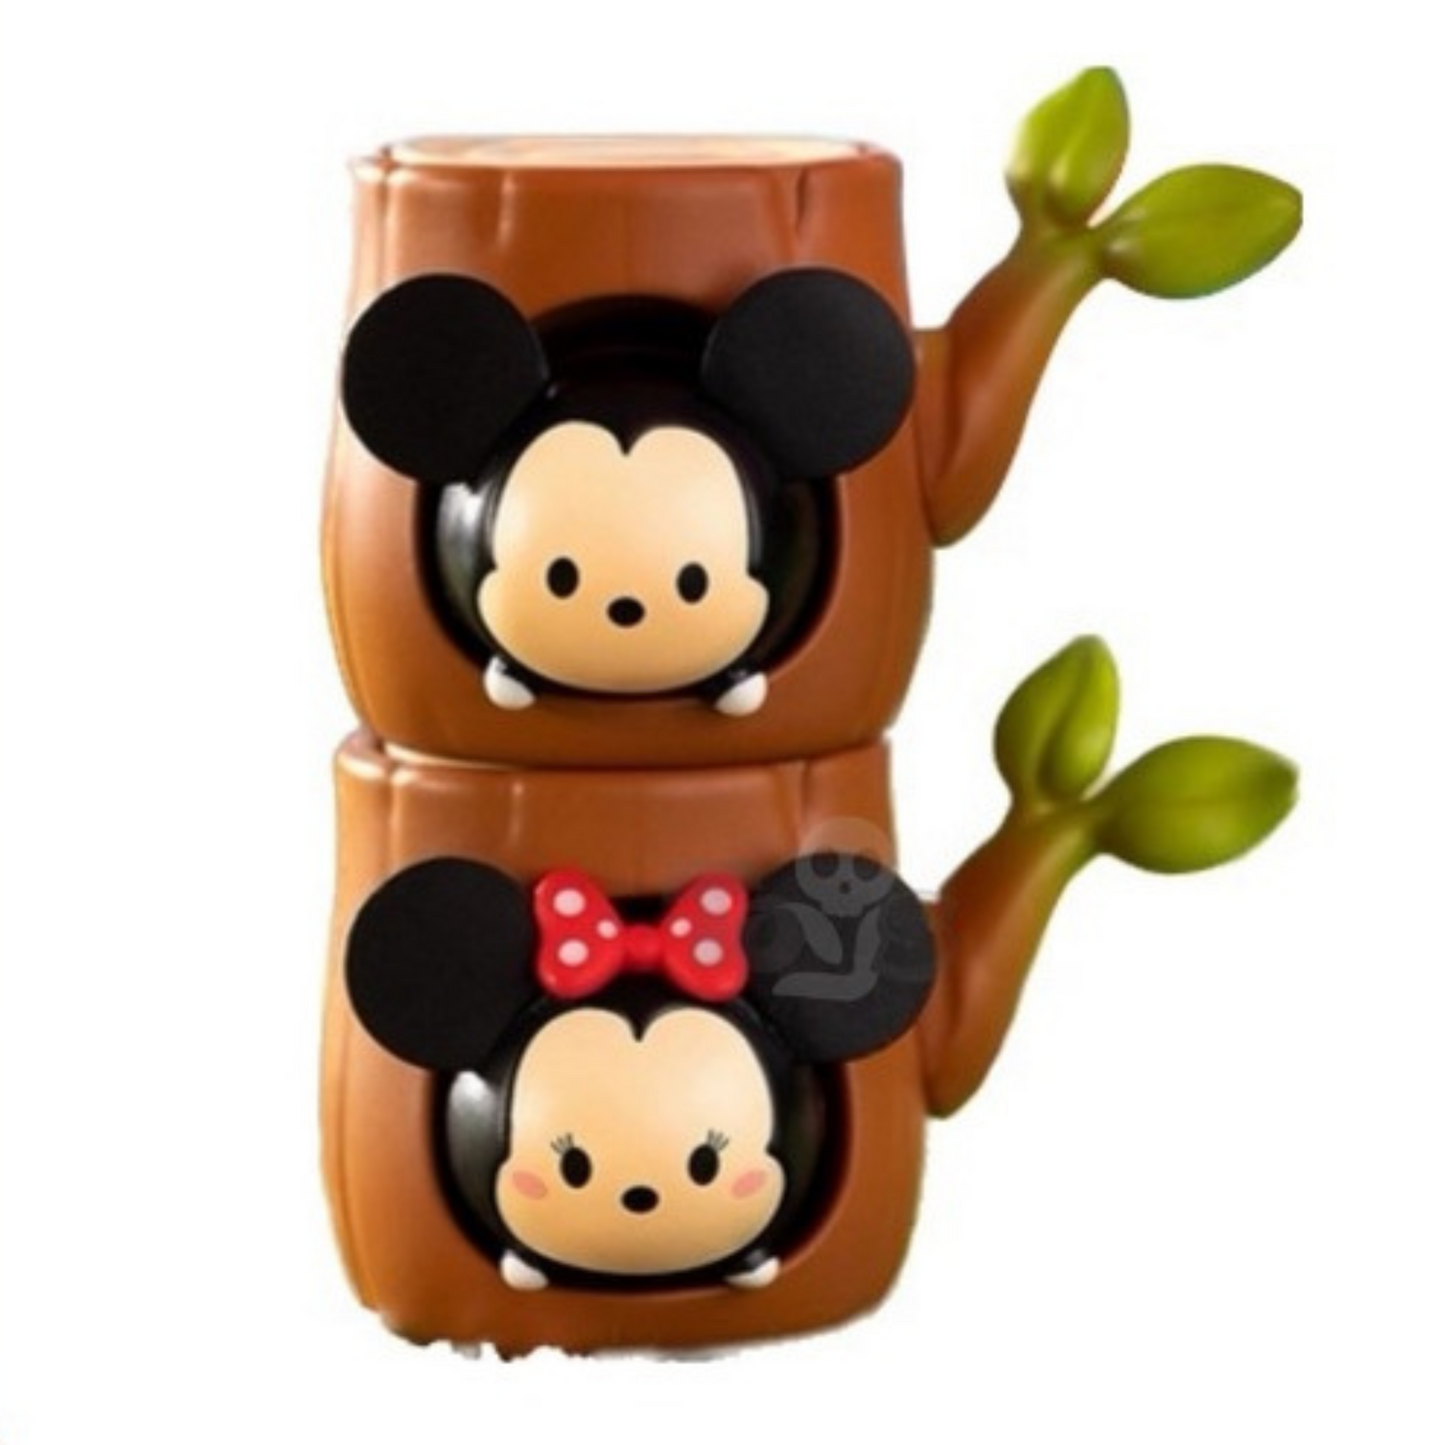 【New】Top Toy Disney Tsum Tsum Tree Log Mini Beans Blind Bag Random Style (2 in 1 + 1 Log))